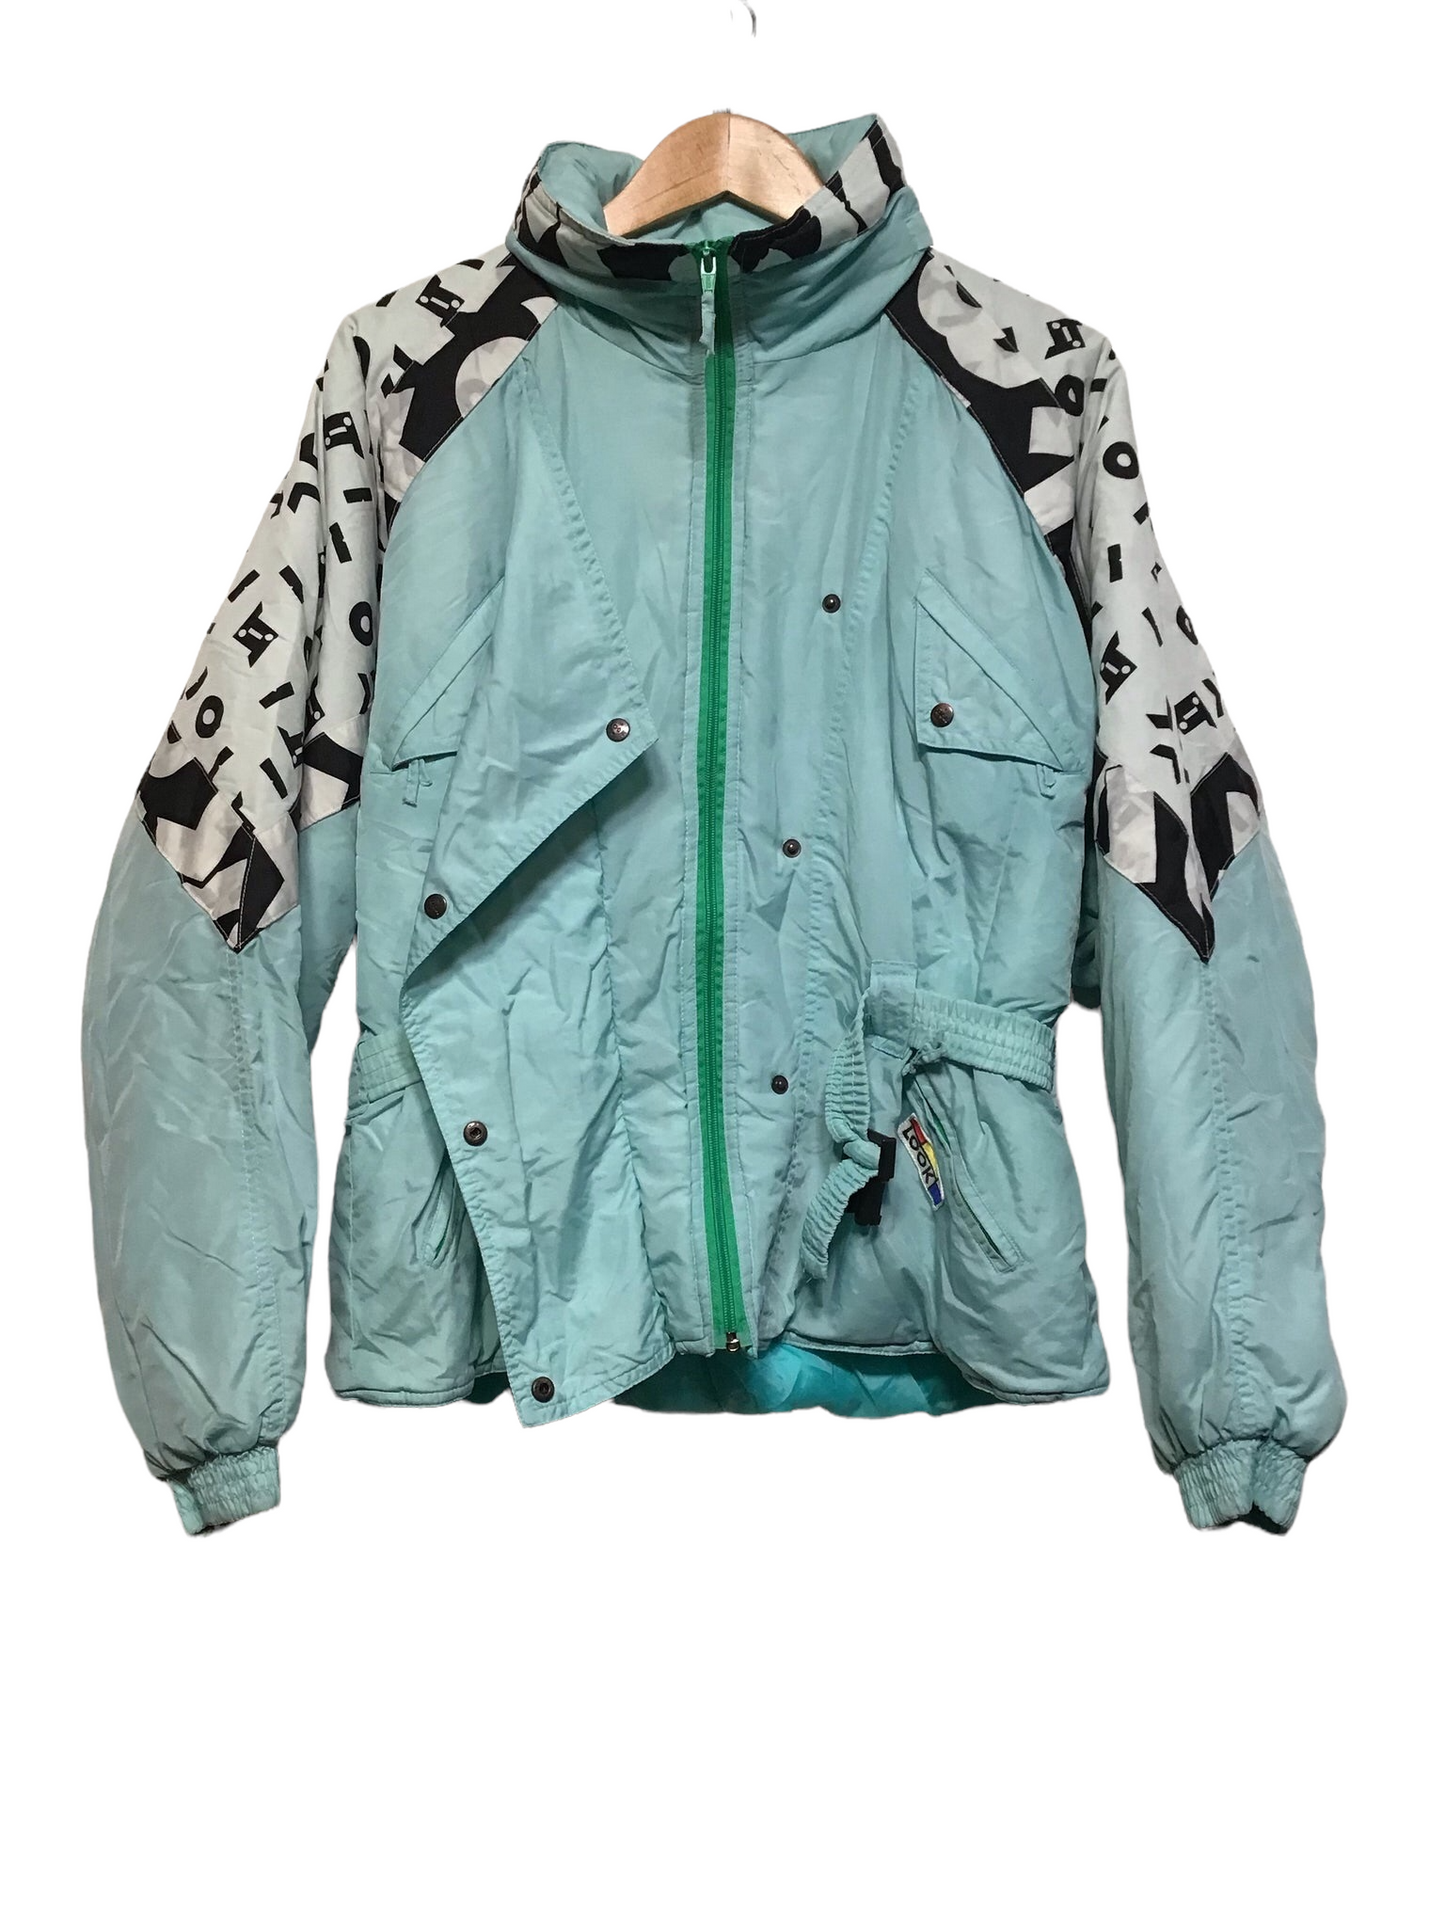 Look Turquoise Ski Jacket (Size L)